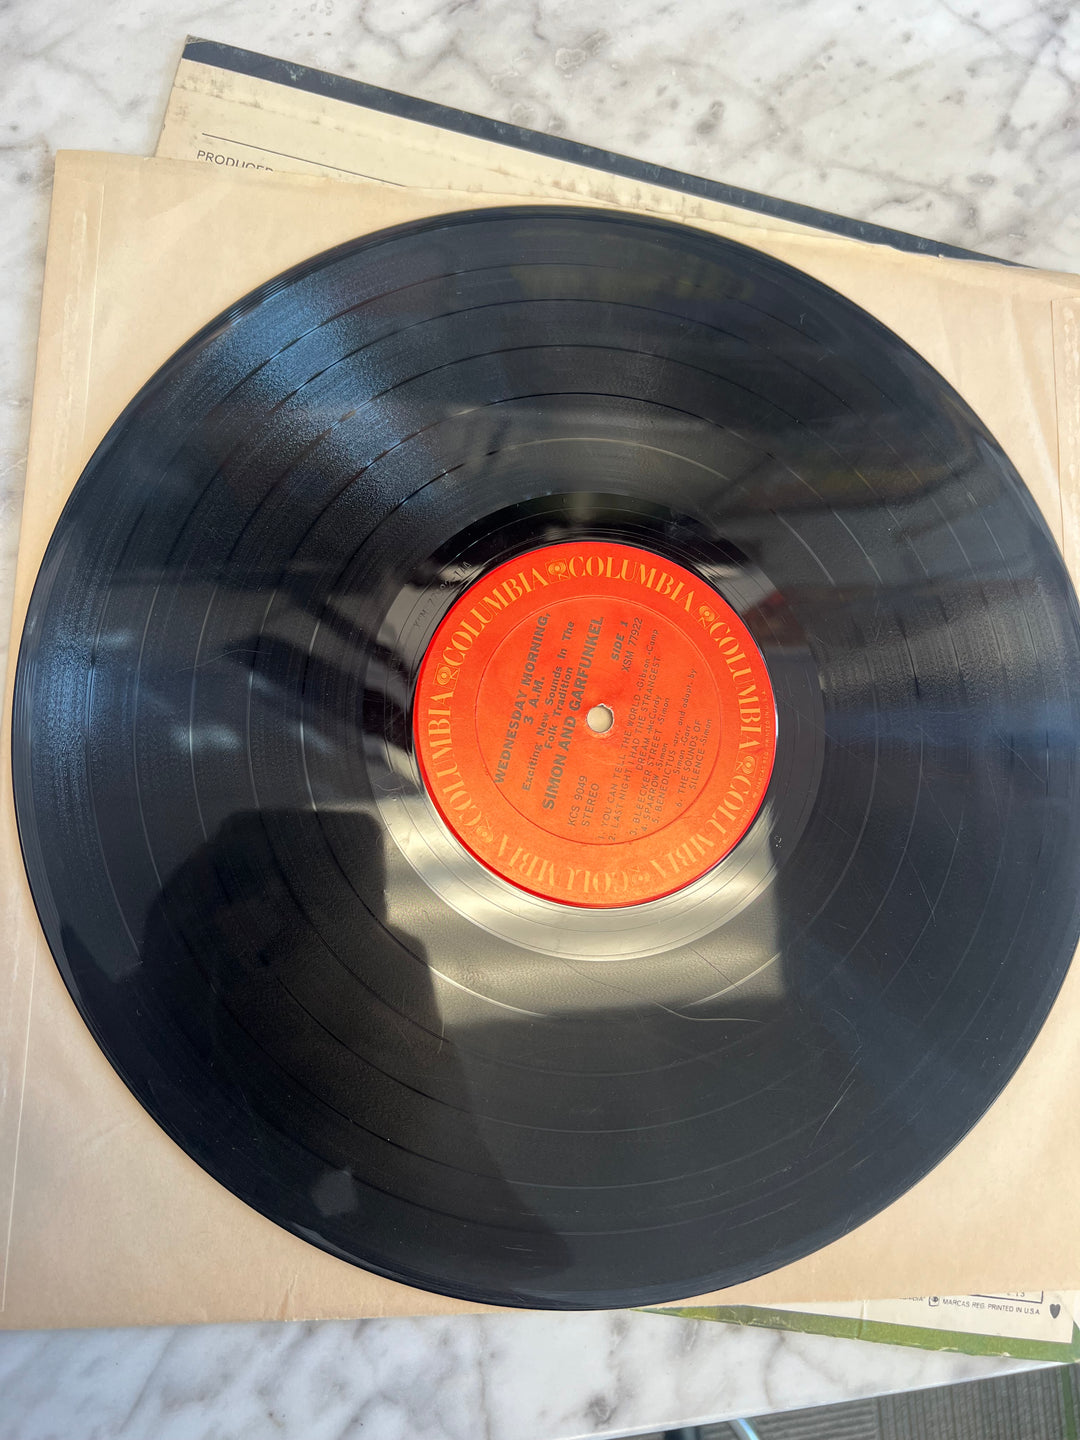 Simon and Garfunkel - Wednesday Morning 3 A.M. Vinyl Record KCS9049